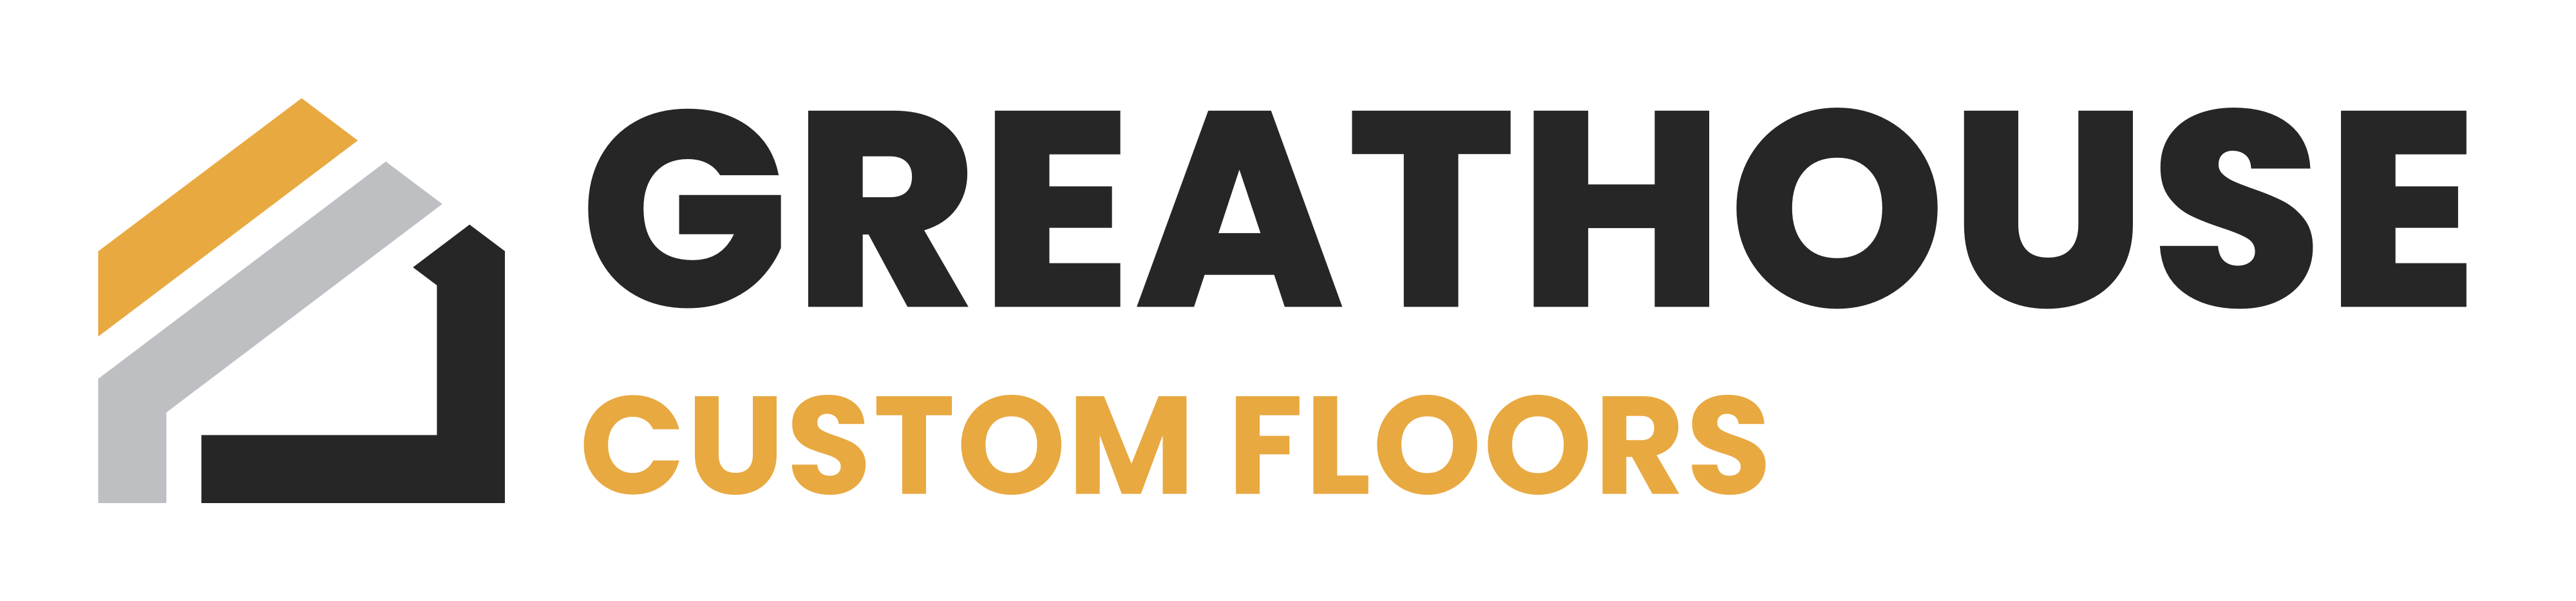 Greathouse Custom Flooring Logo